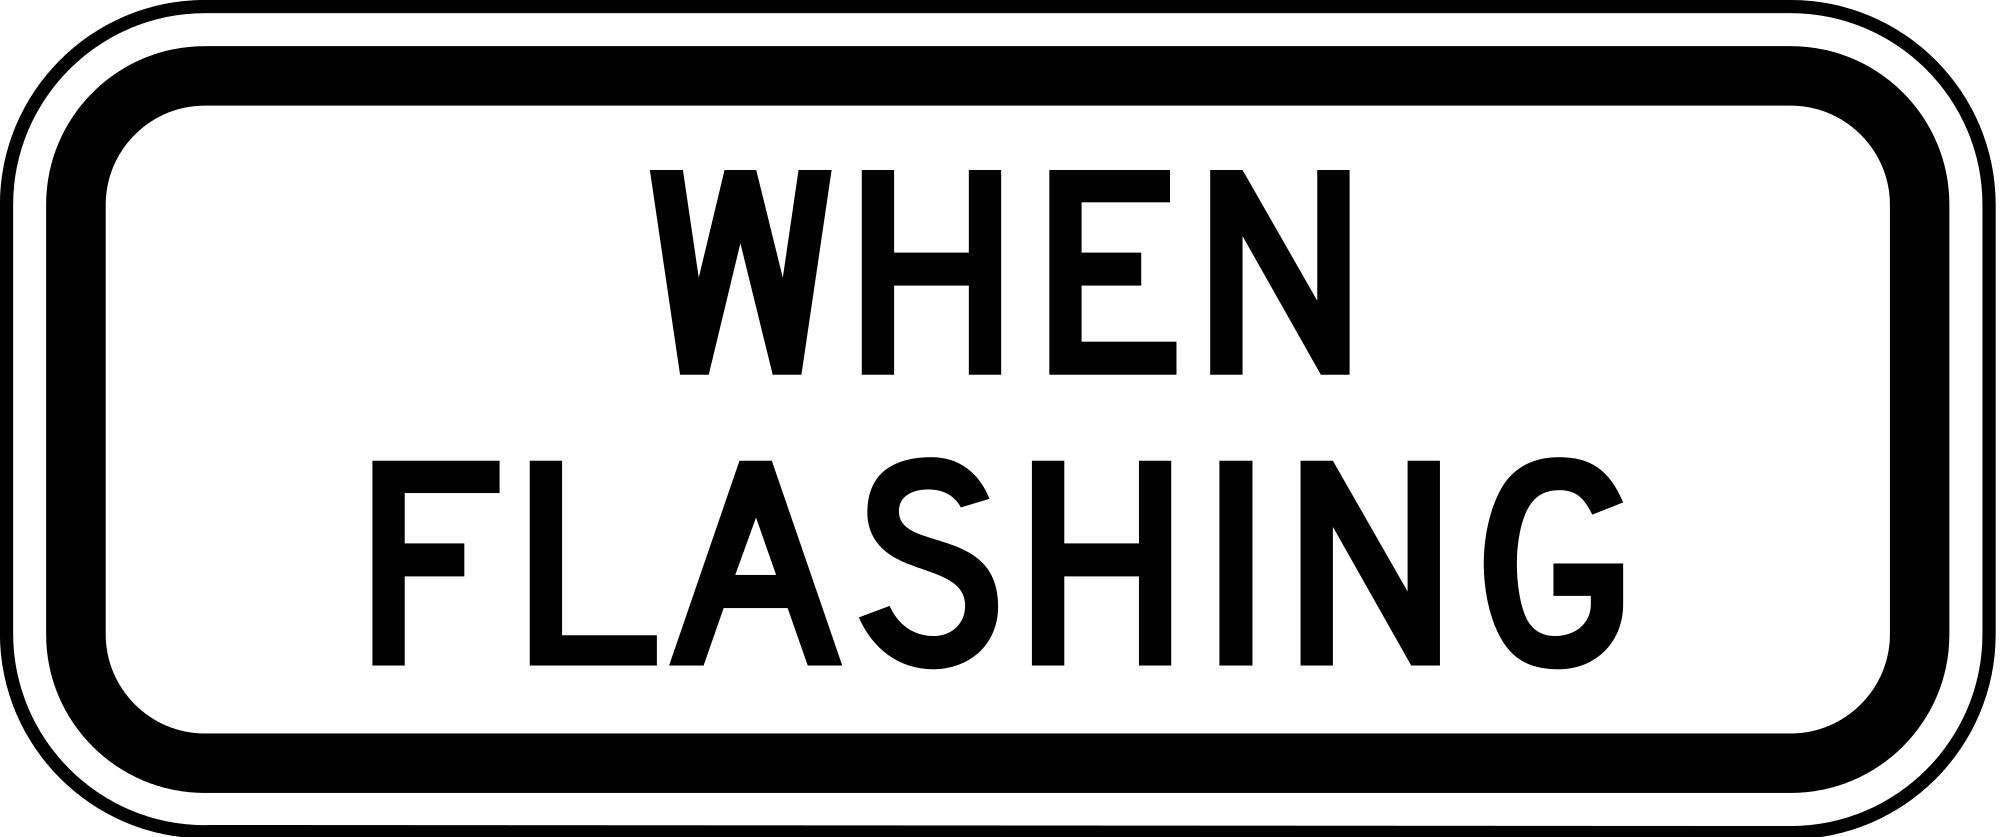 S4-4 When Flashing School Sign